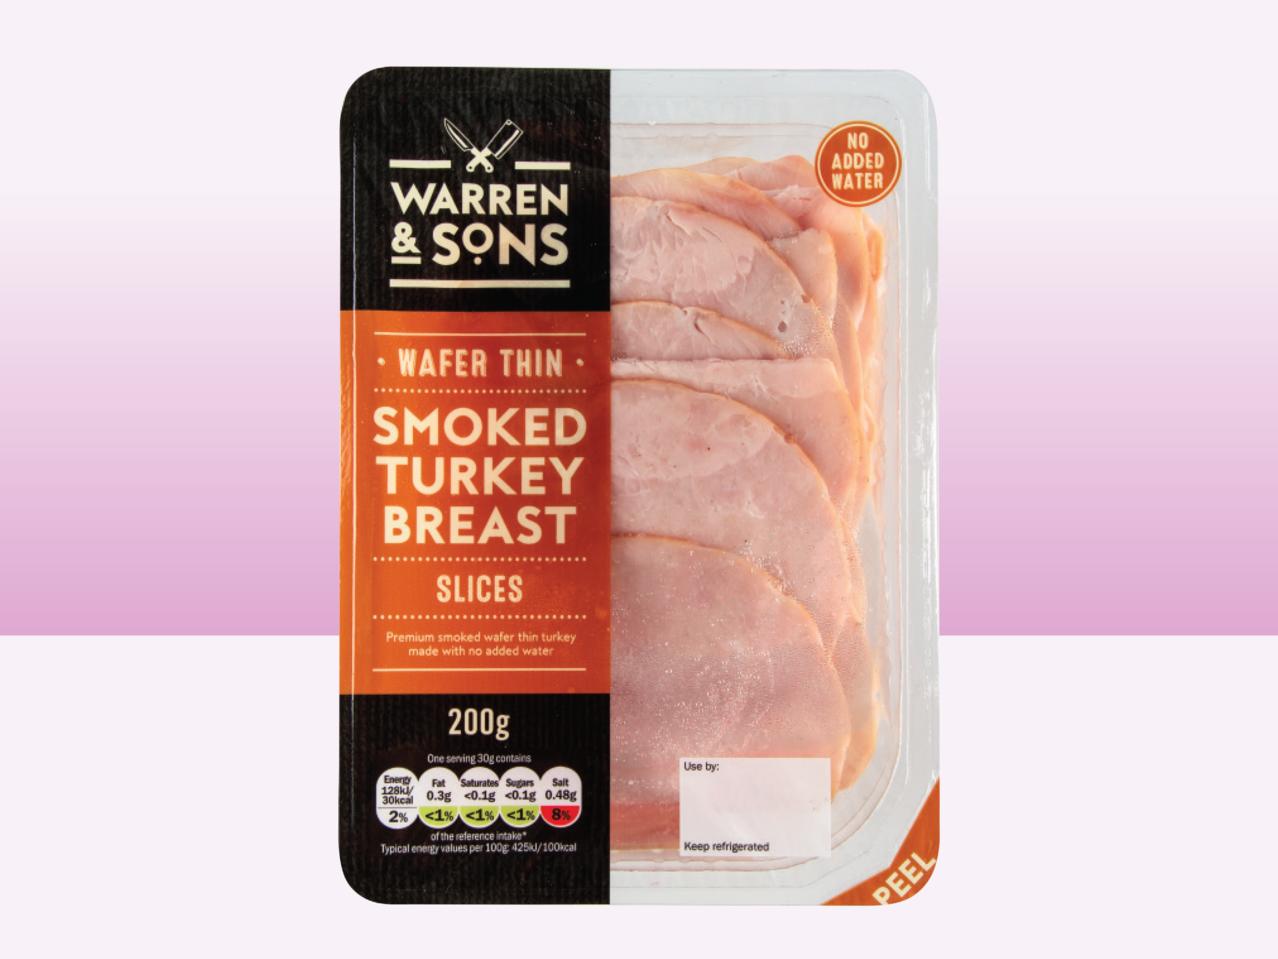 WARREN & SONS Wafer Thin Smoked Turkey Breast Slices